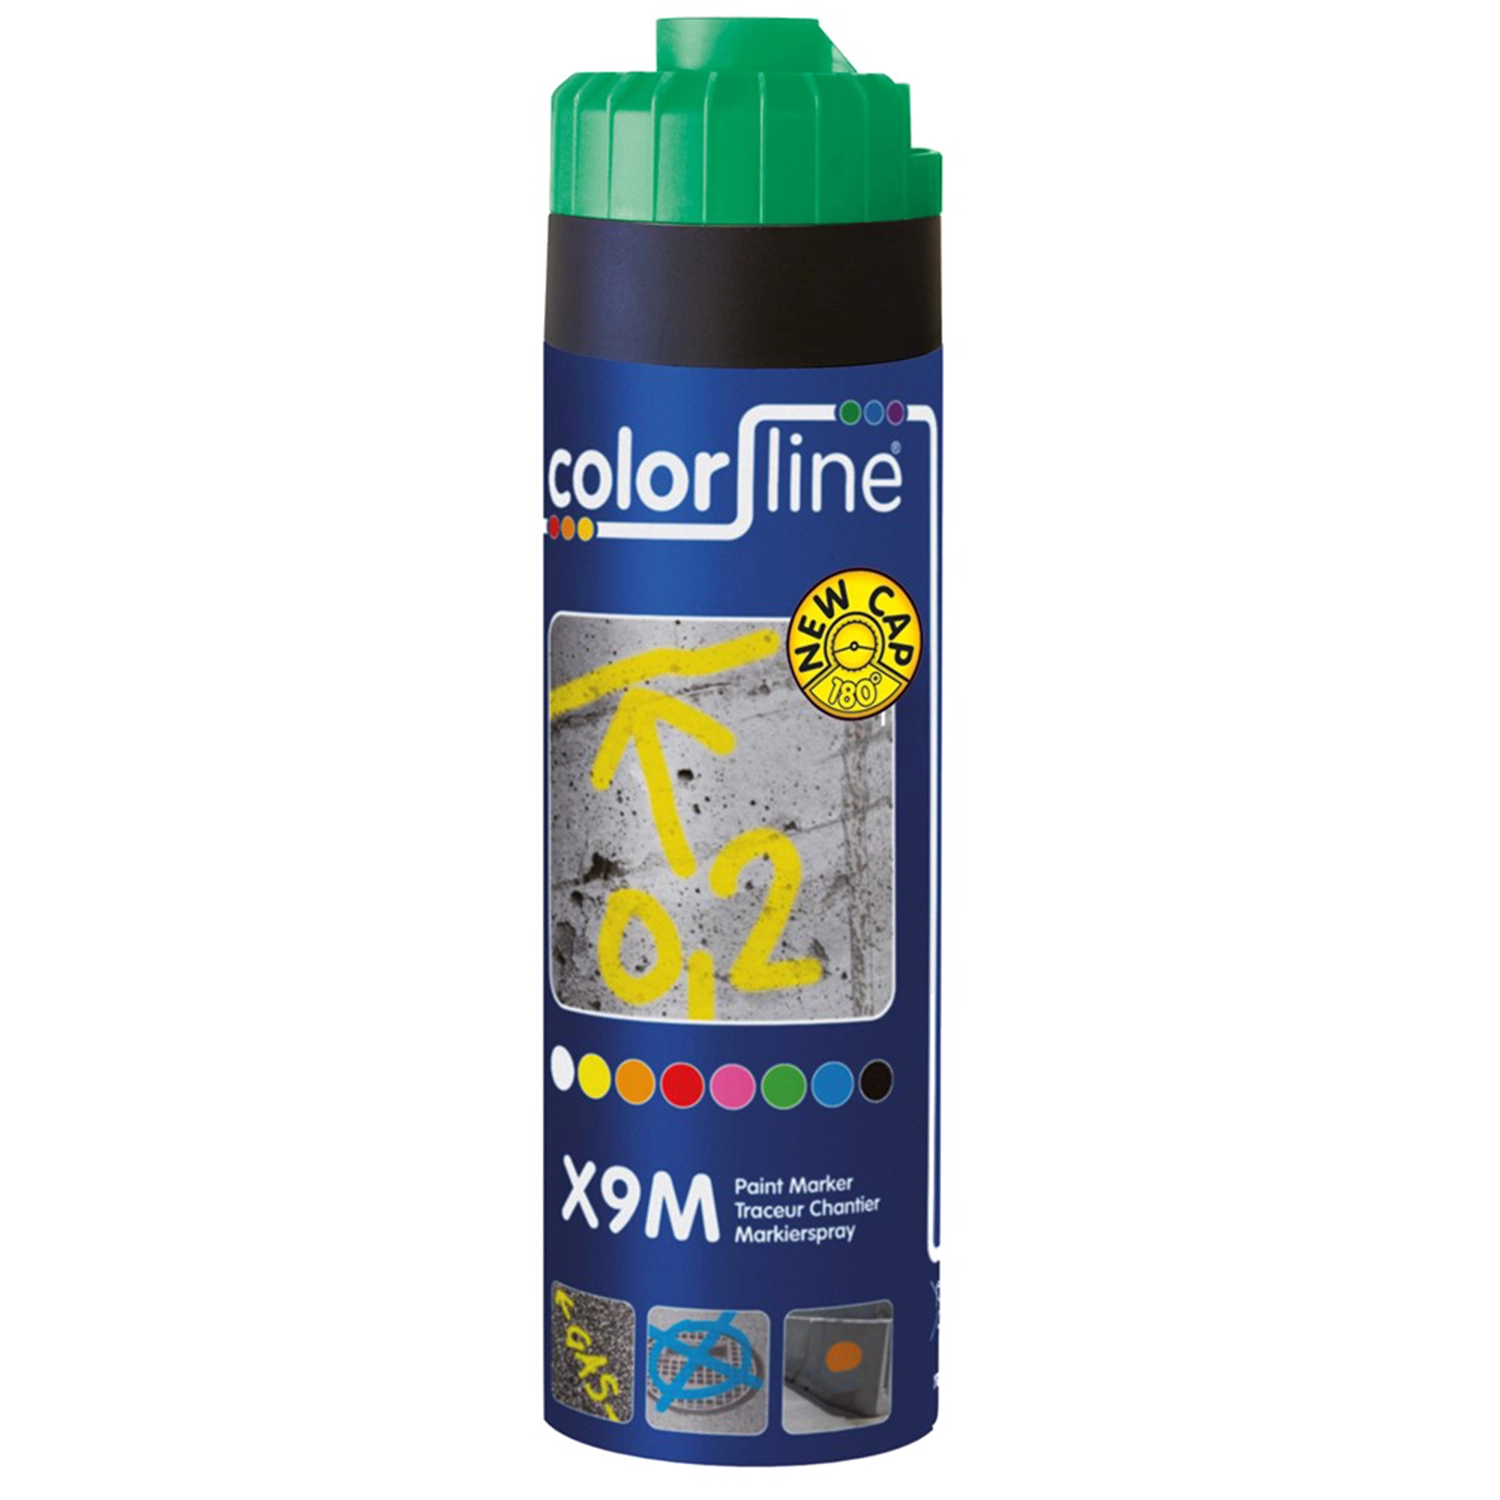 COLORLINE X9M Paint Marker - 500 Ml - Groen - Groene verfmarker met 500 ml inhoud en COLORLINE-logo.